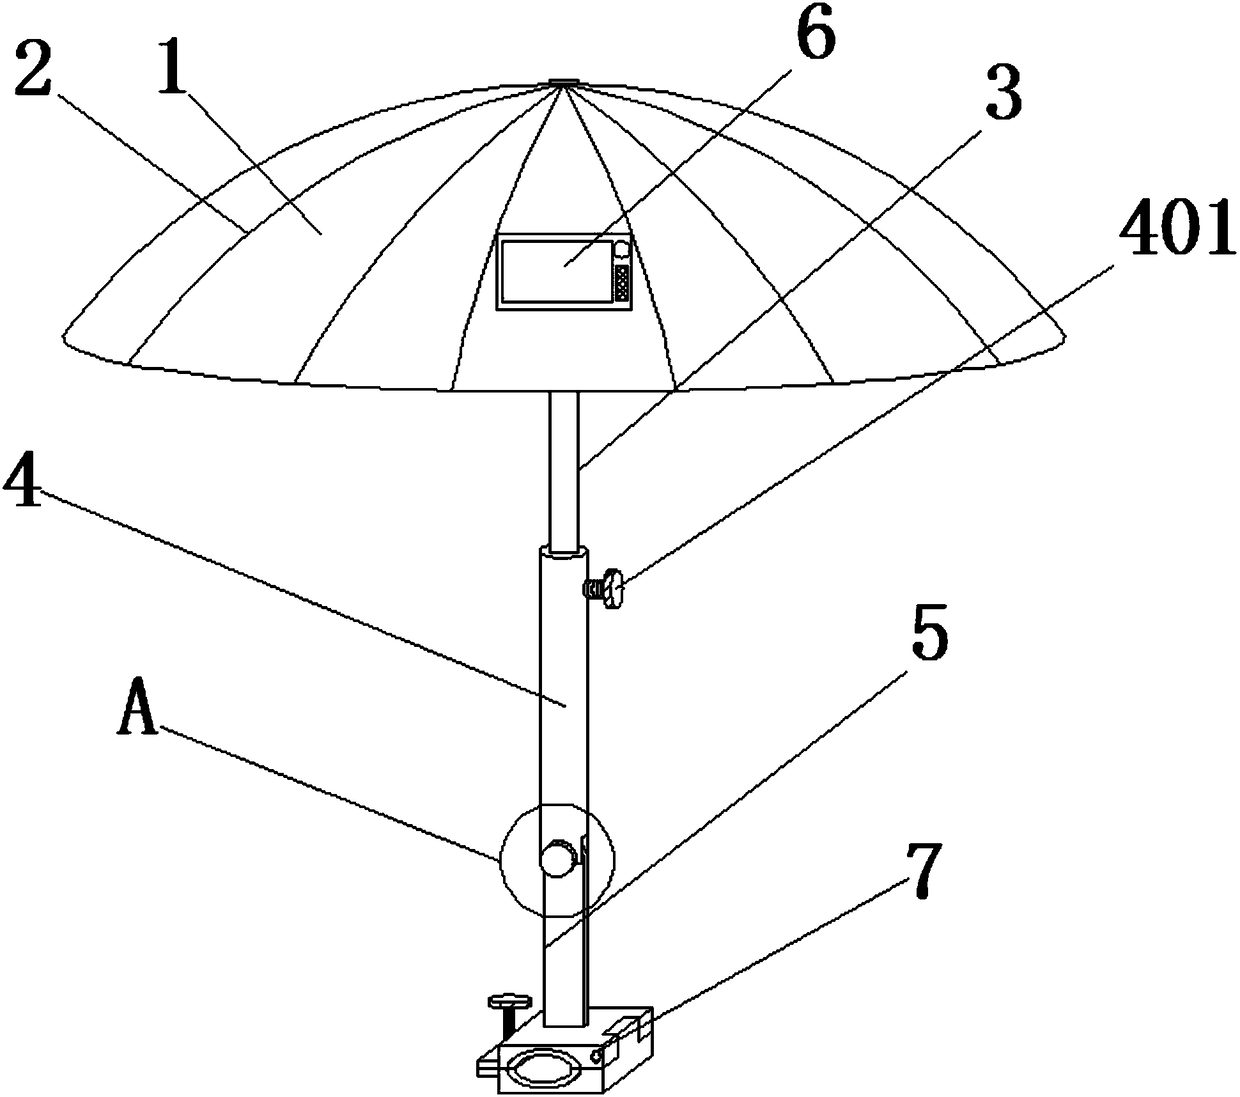 Vehicle-mounted sun umbrella device